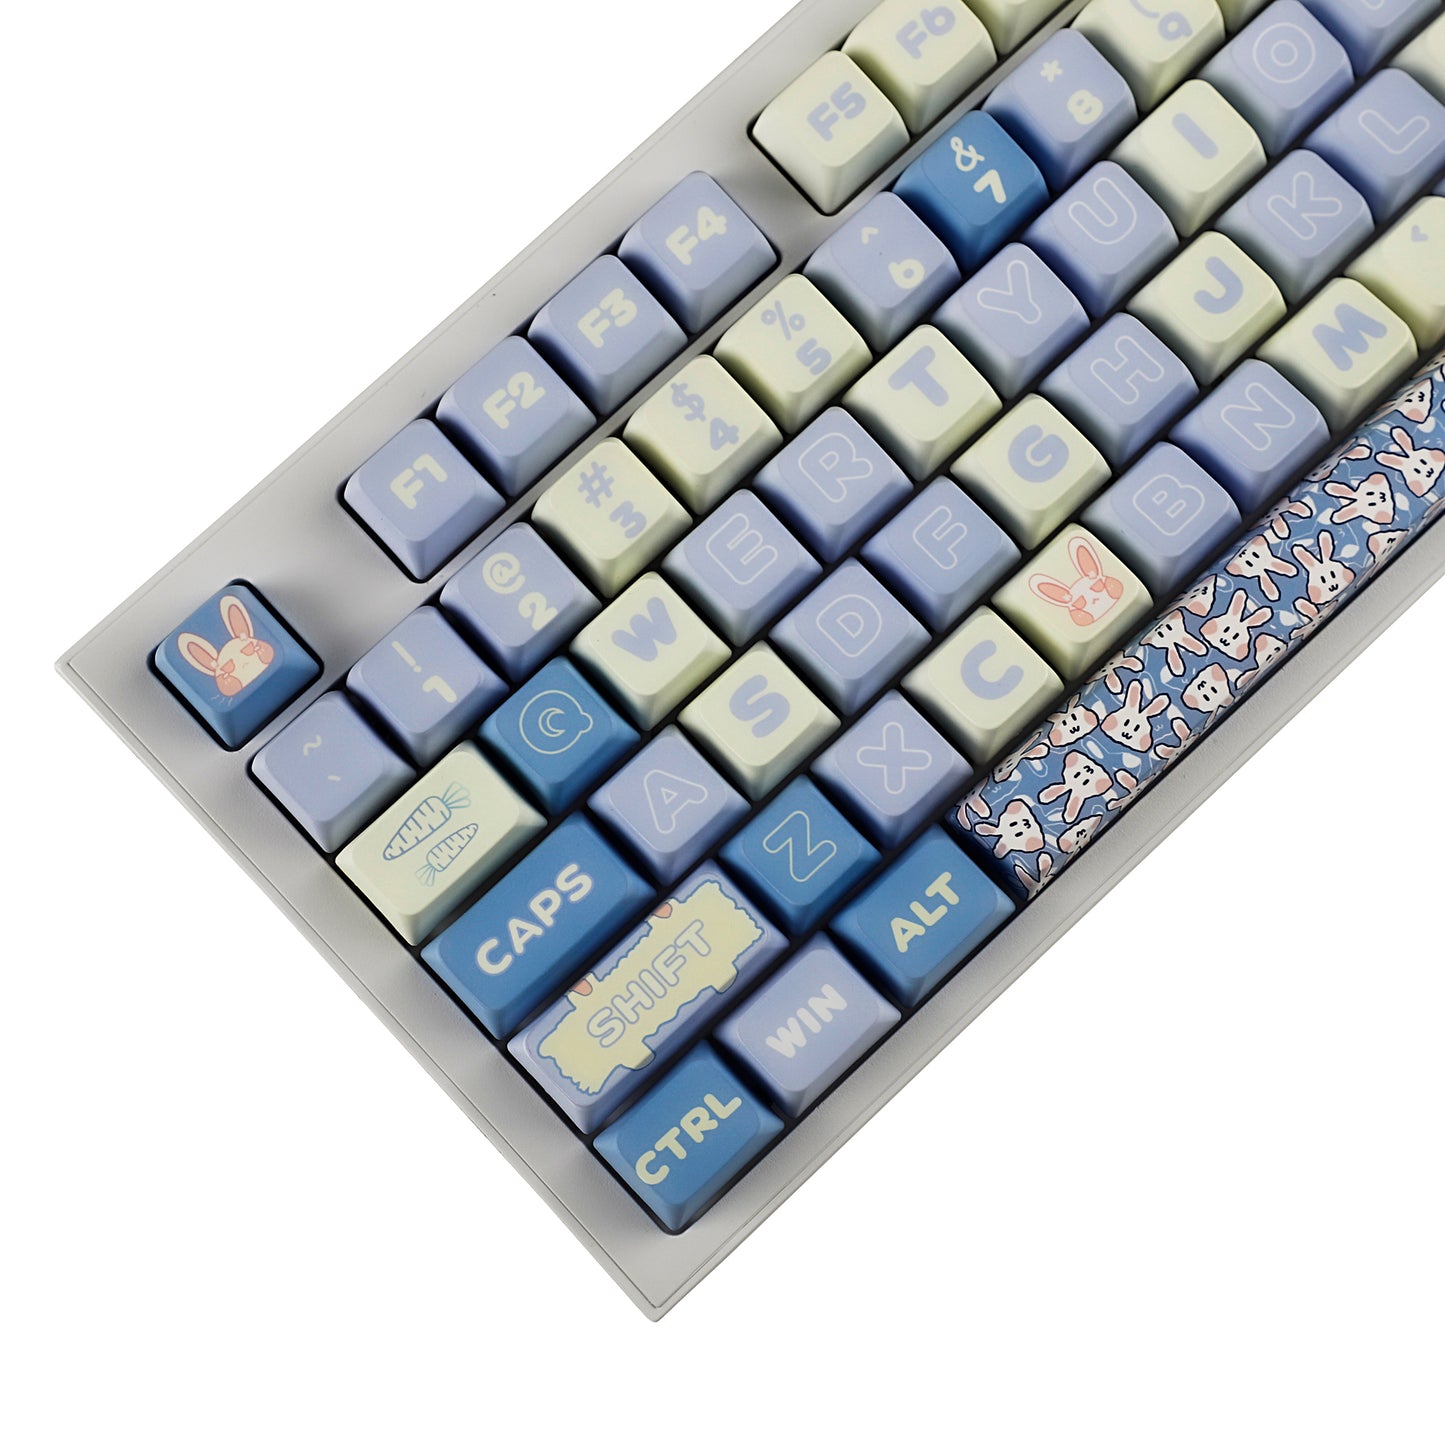 YMDK Milk Blue Rabbit 125 keys MDA profile Thick PBT Dye Sub 5 Sides Over Keycaps